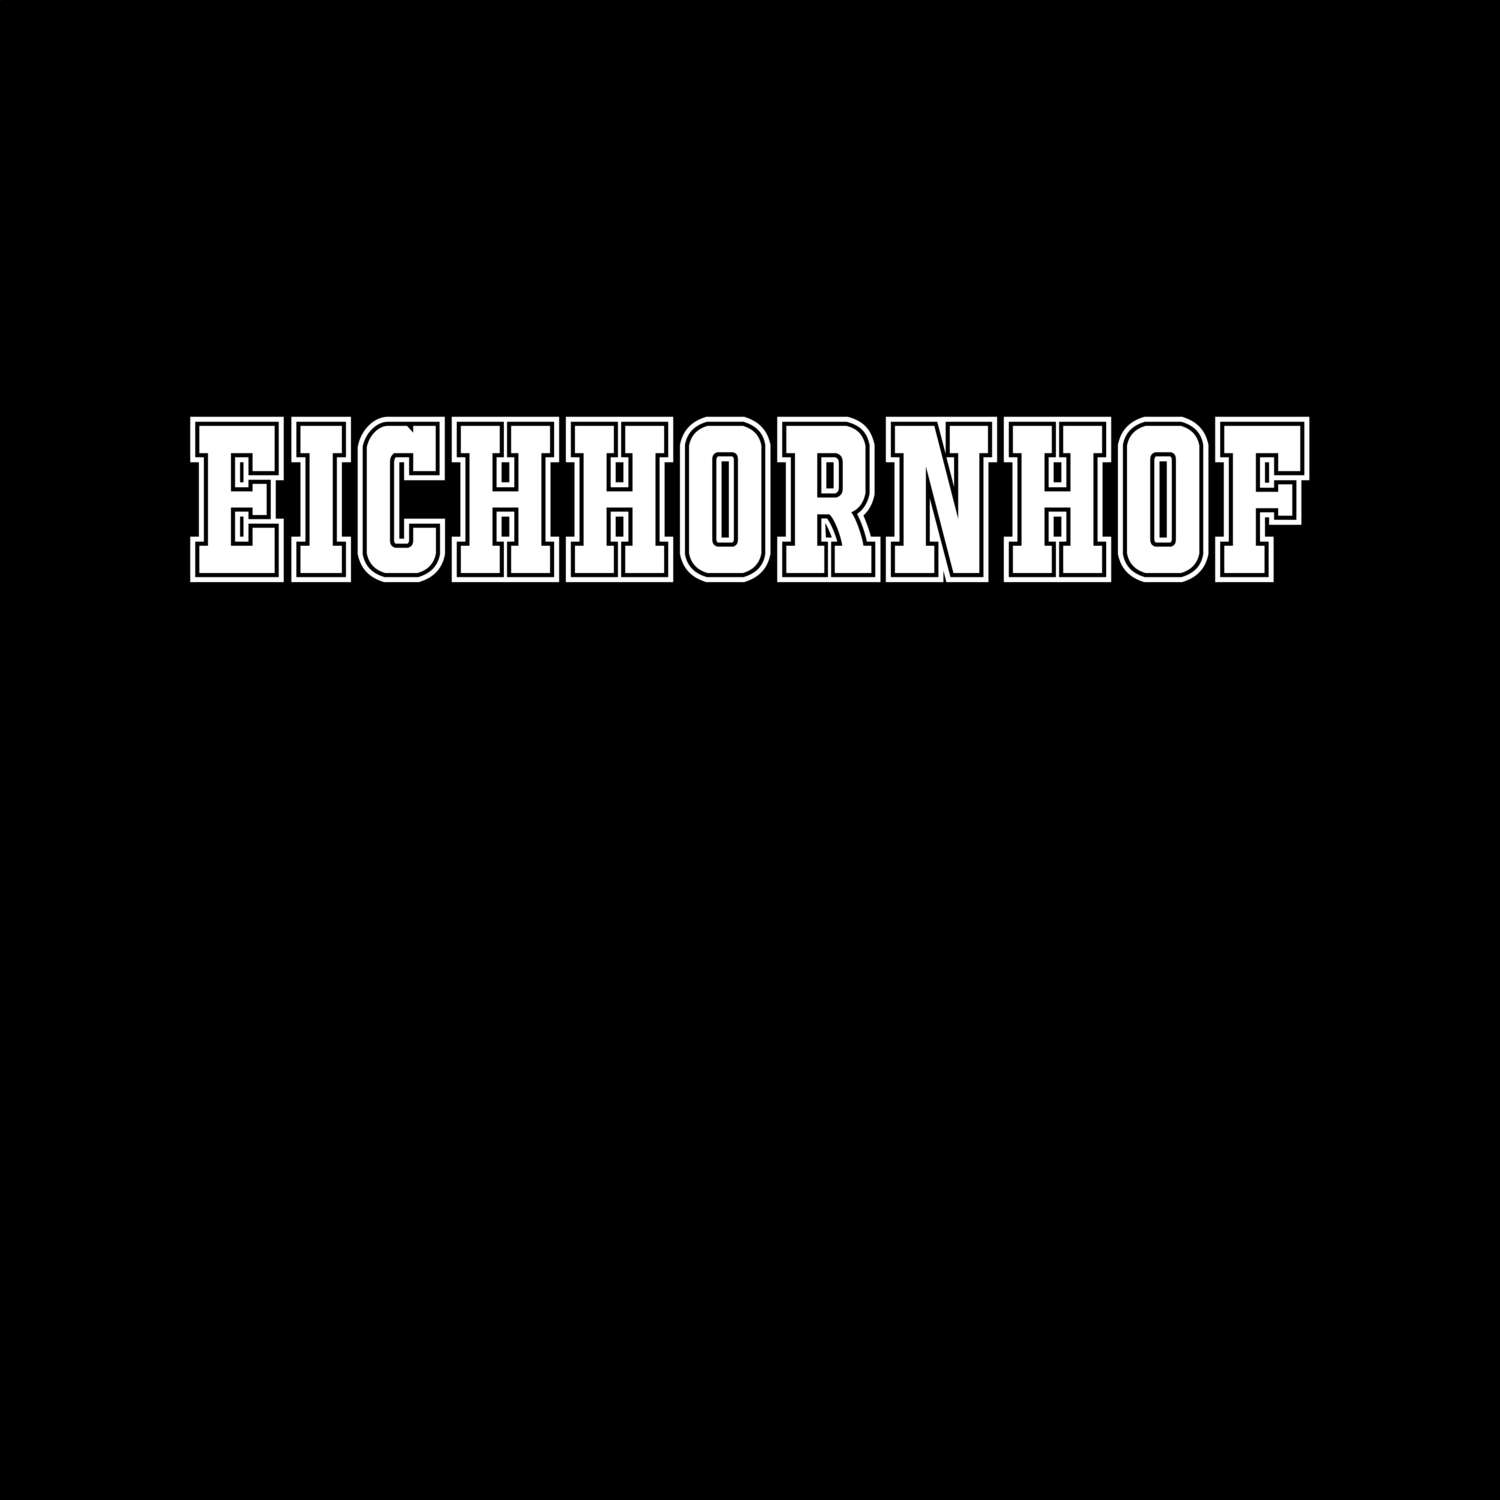 Eichhornhof T-Shirt »Classic«